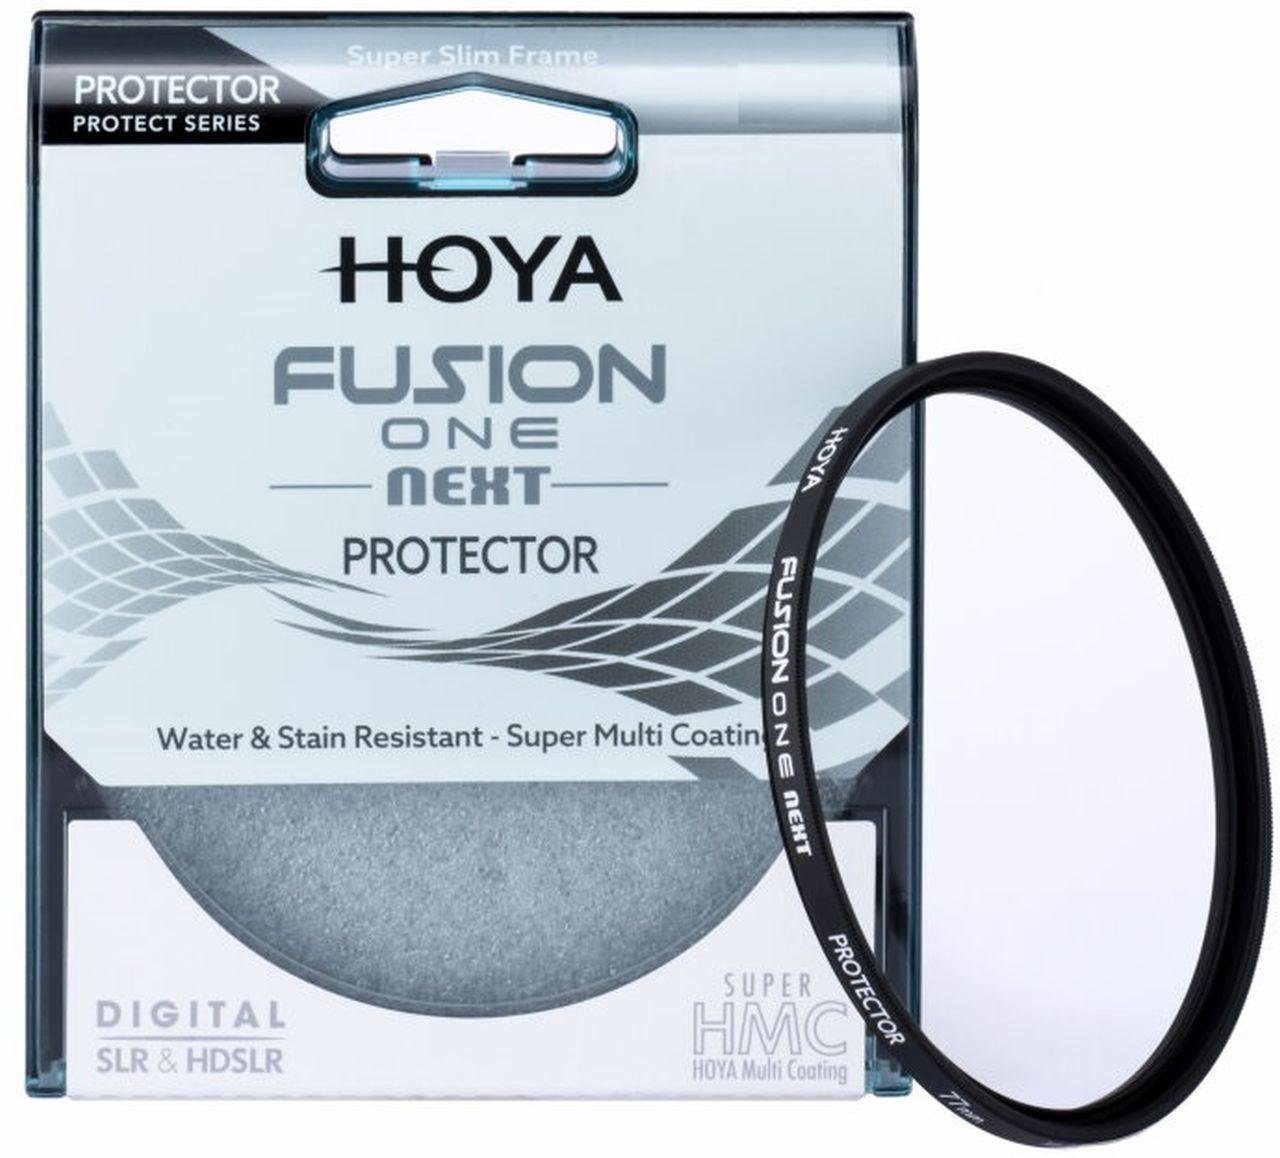 Next Protector Hoya Objektivzubehör ONE 43mm Fusion